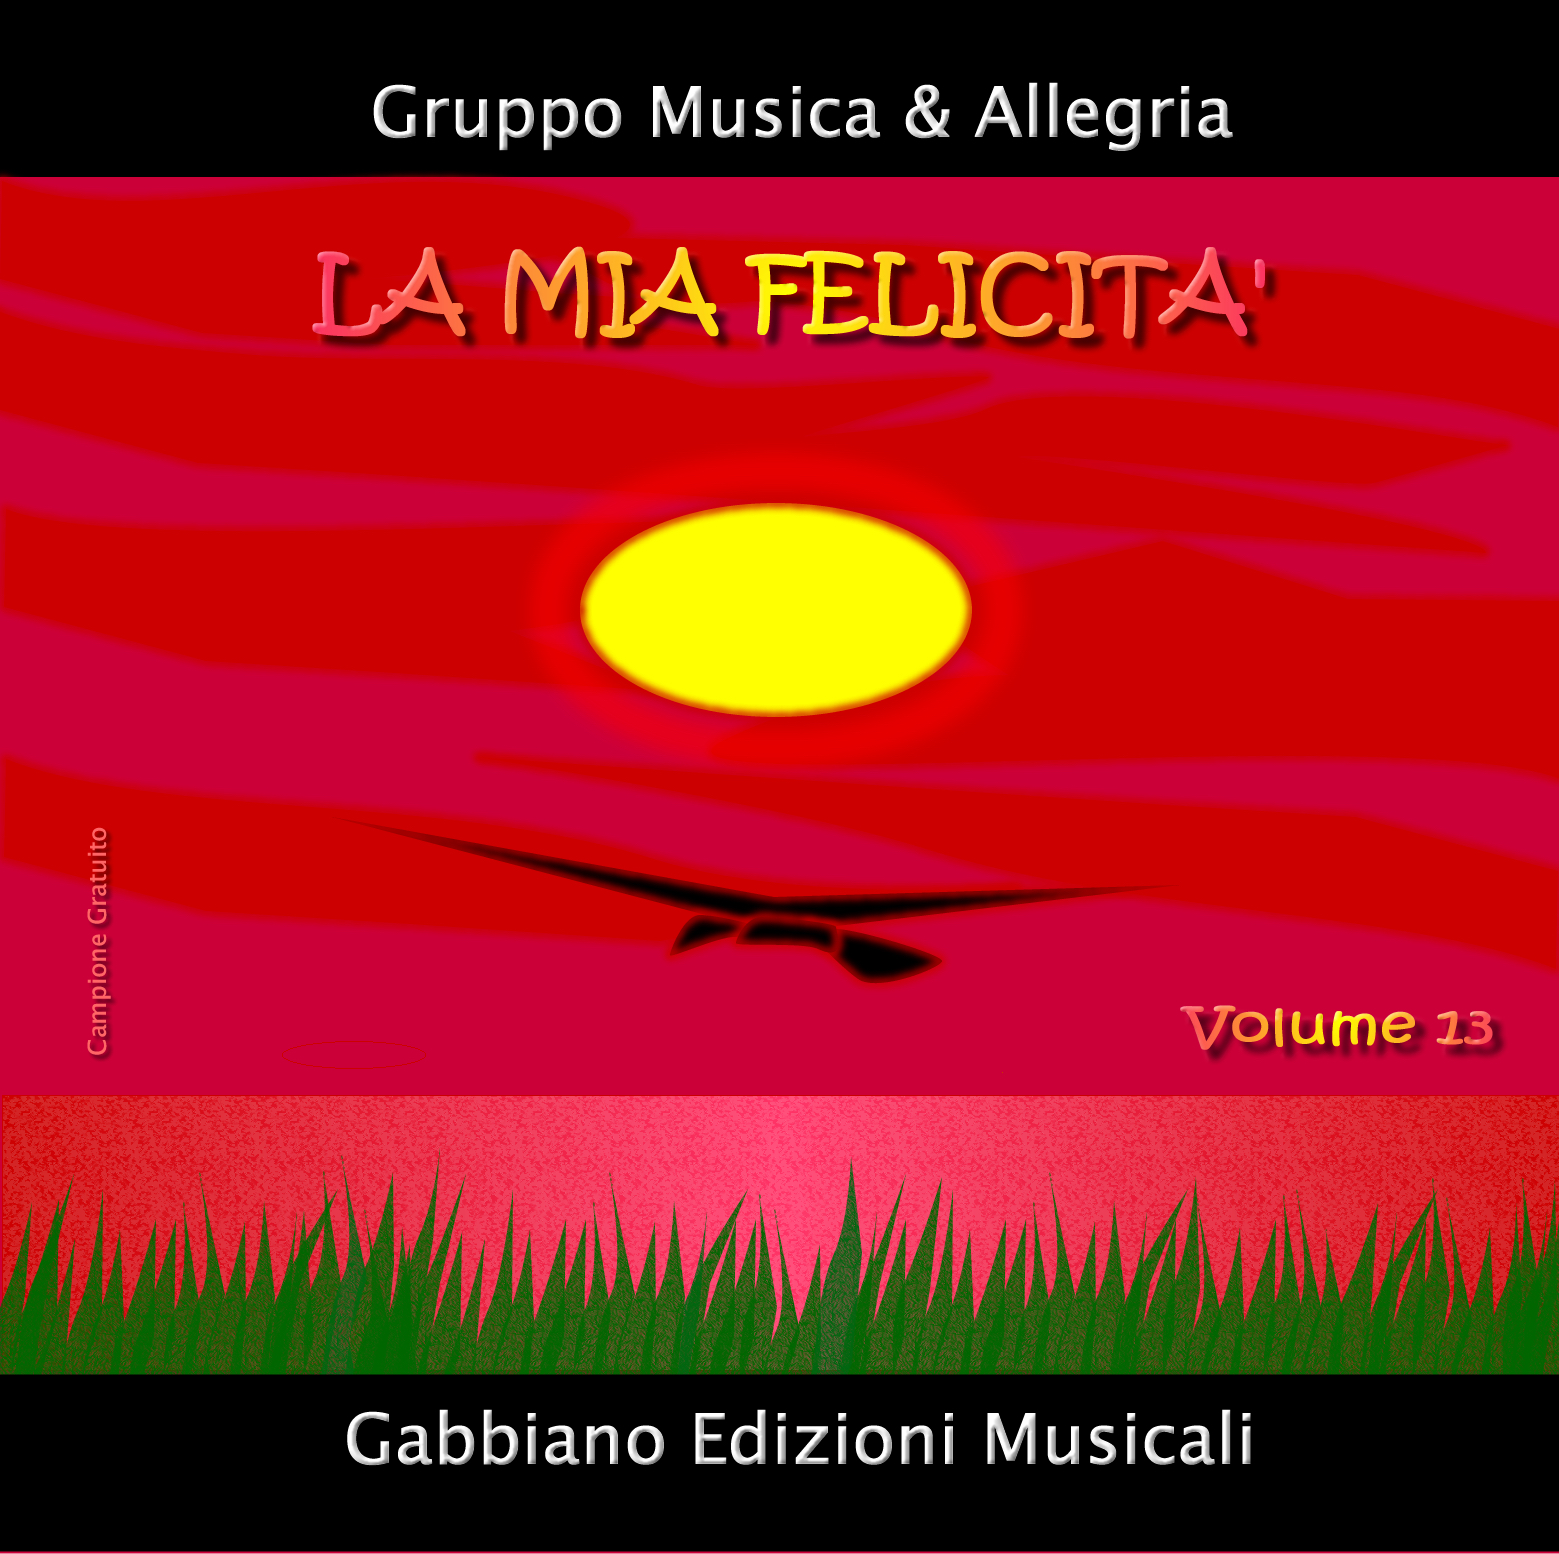 GBN113CD - LA MIA FELICITA' - Volume 13